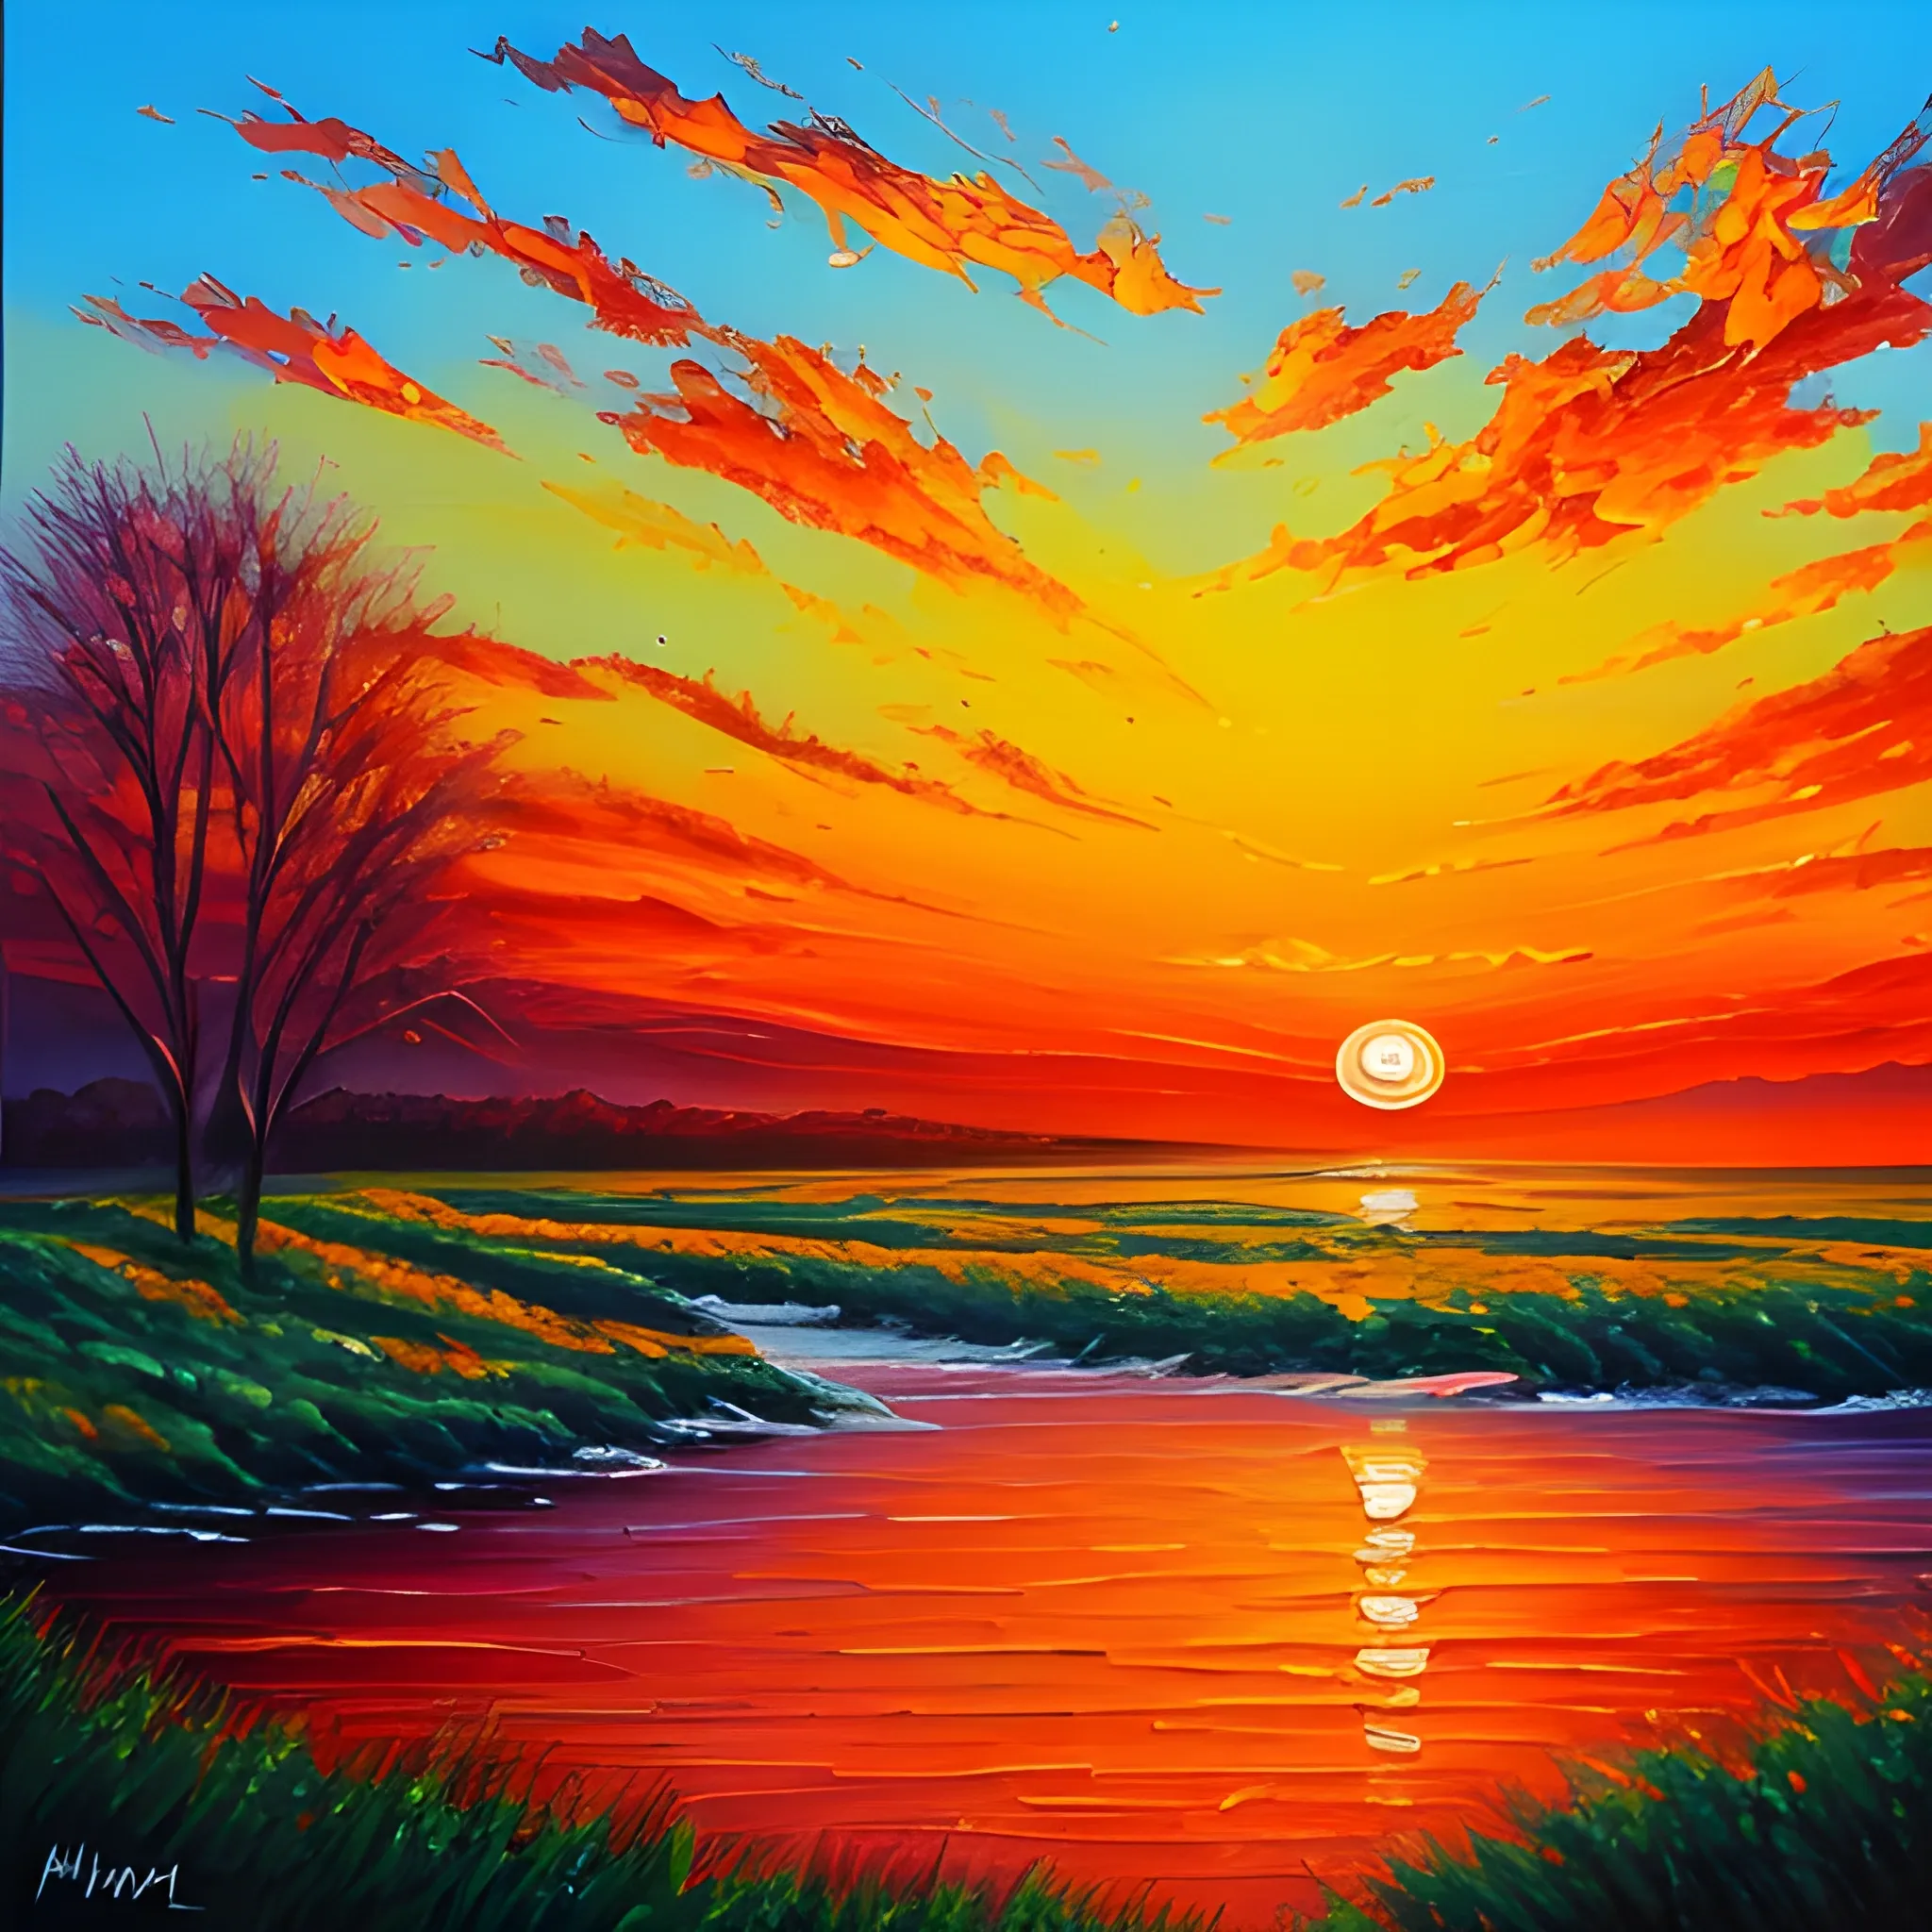 Sunset landscape painting, oil painting style - Arthub.ai